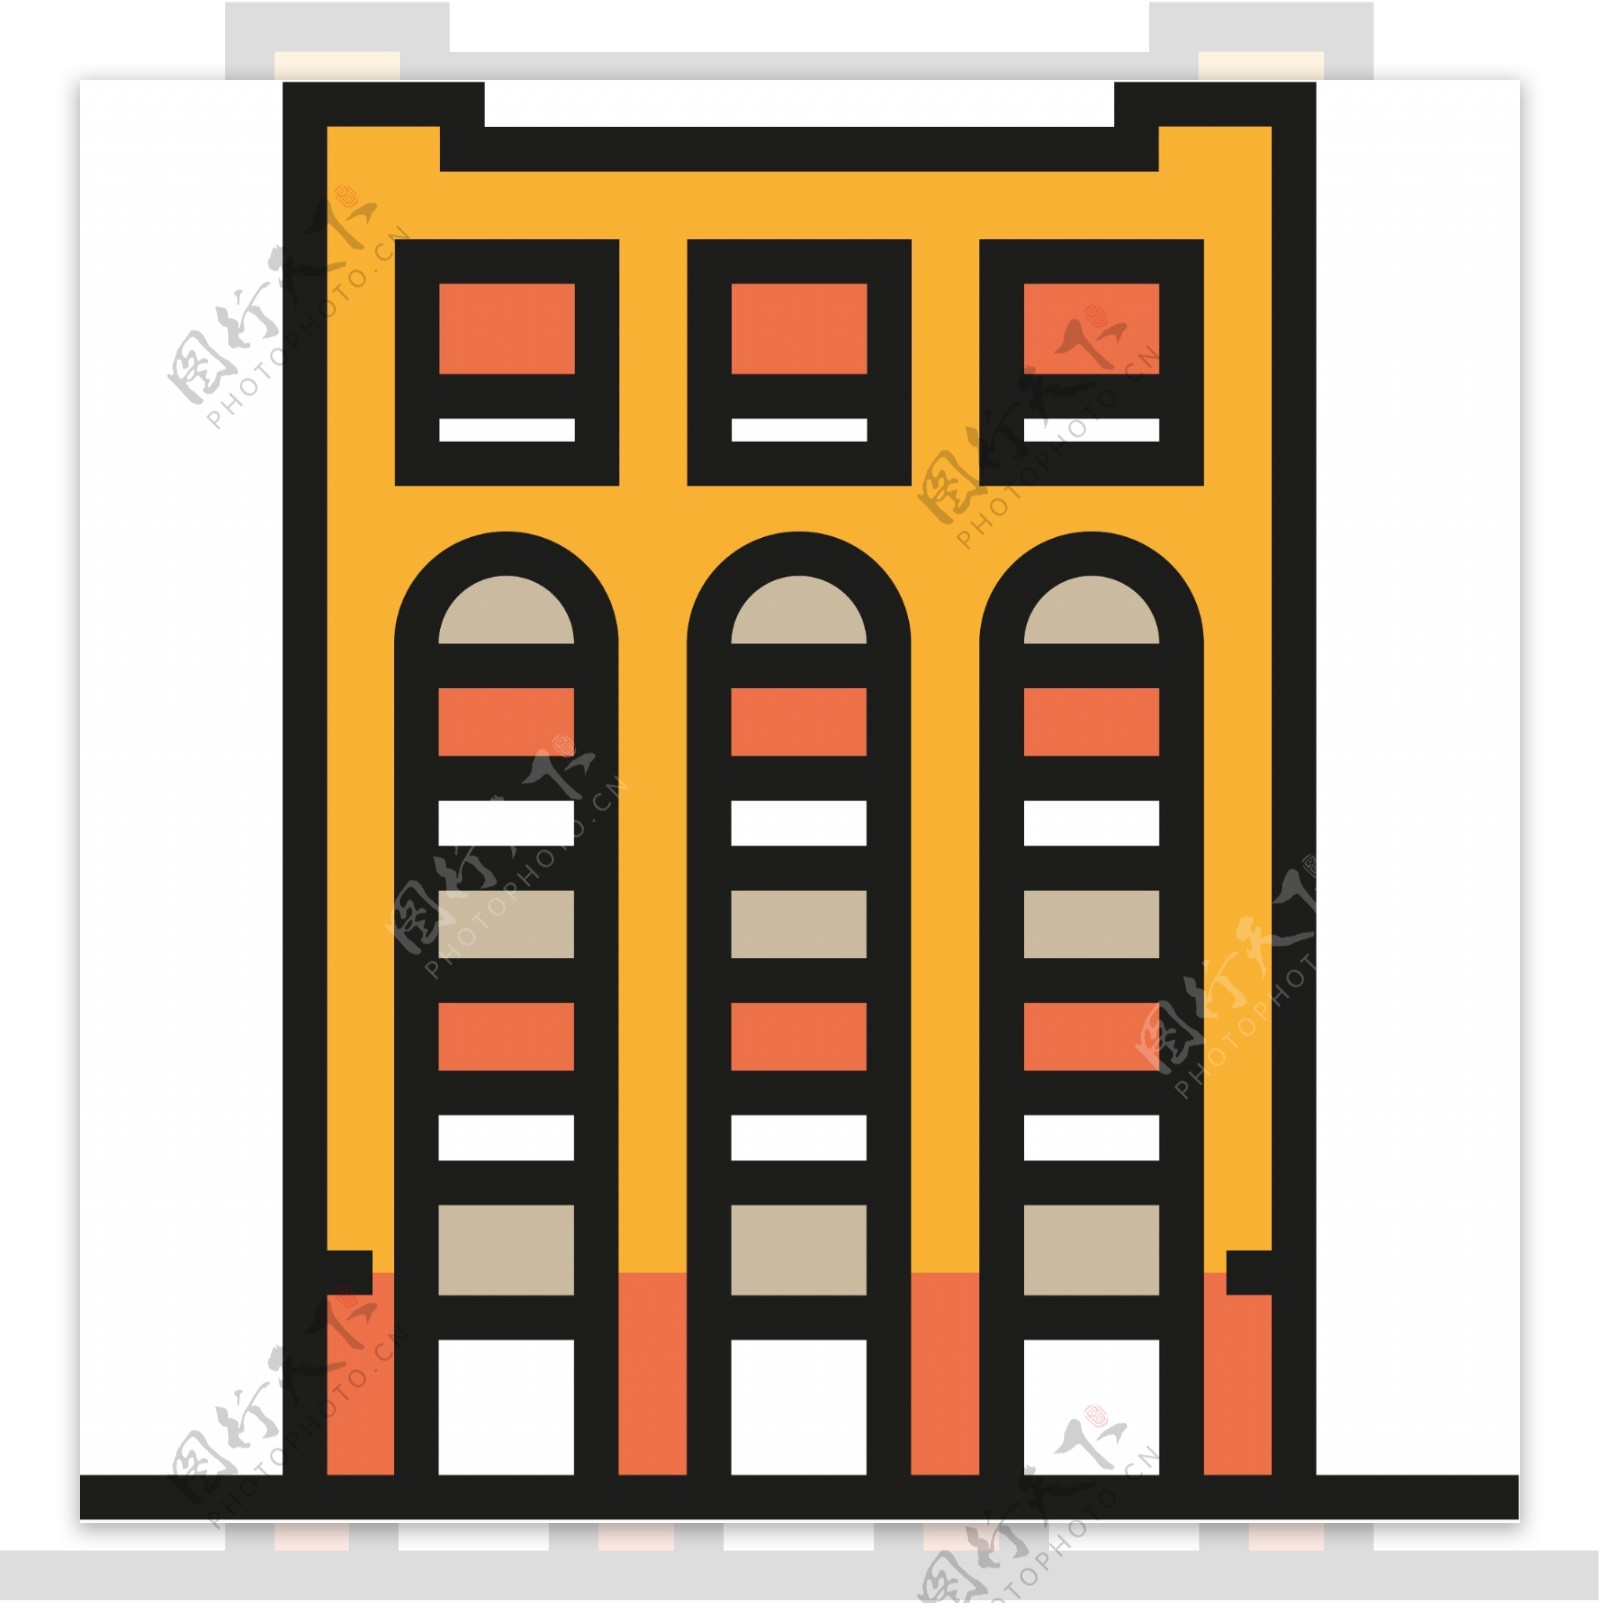 线性建筑icon图标素材